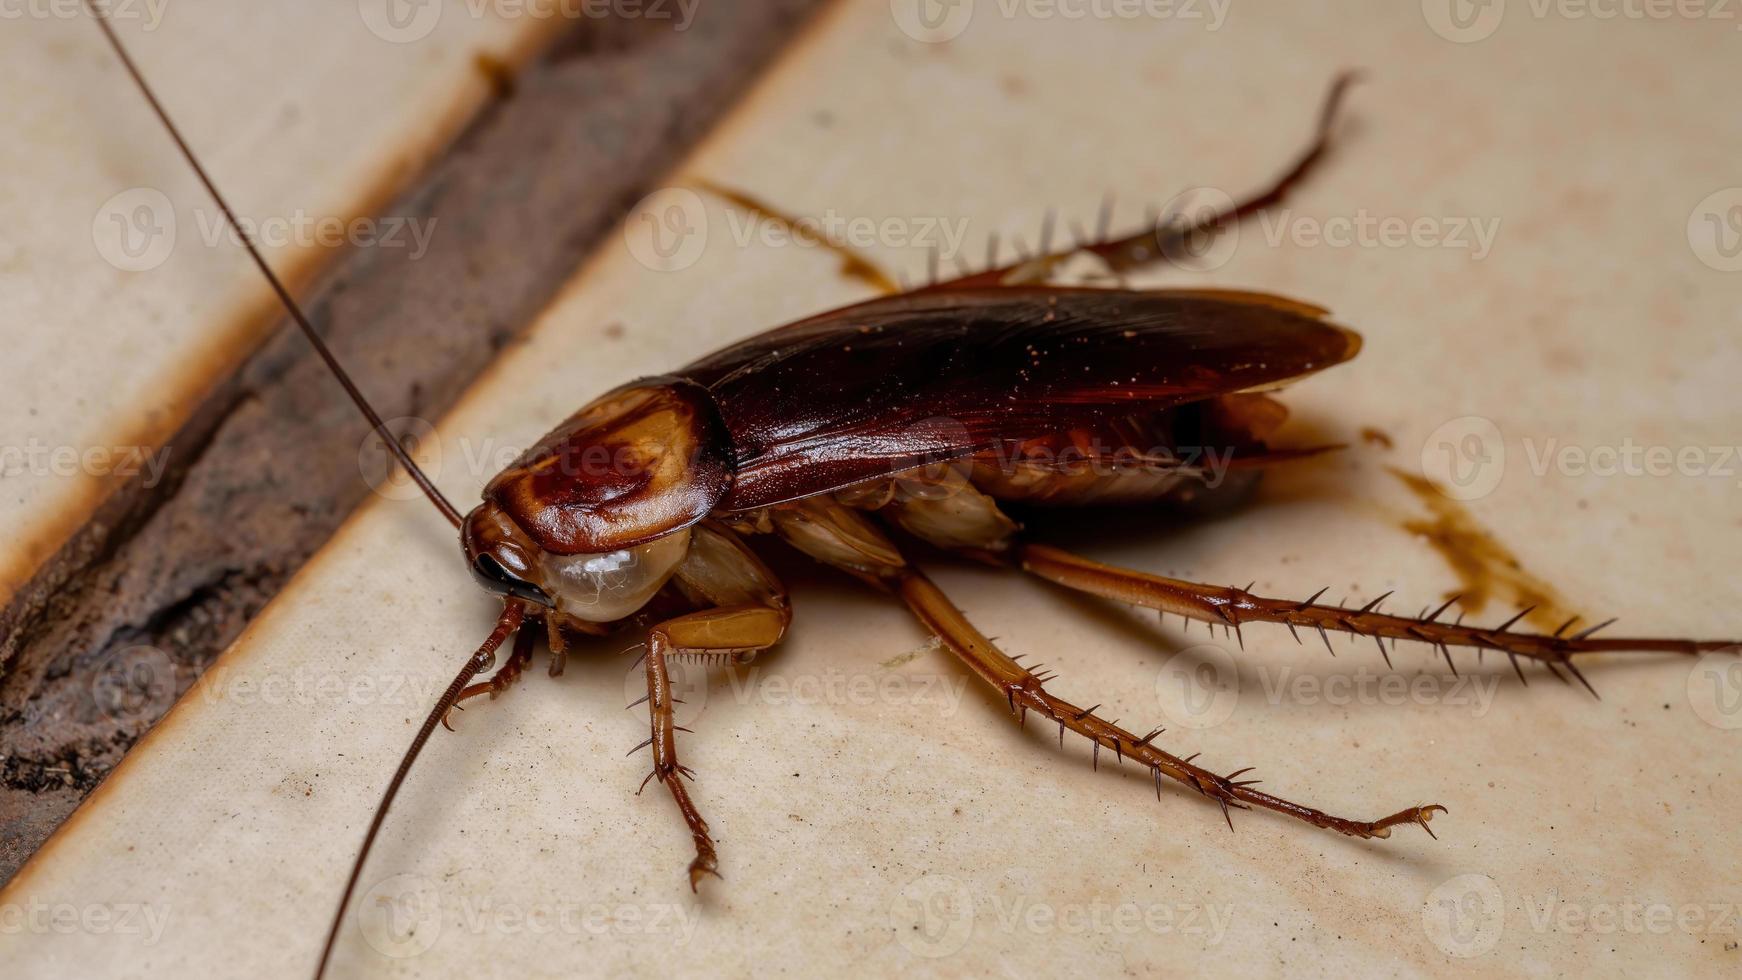 cucaracha americana muerta foto